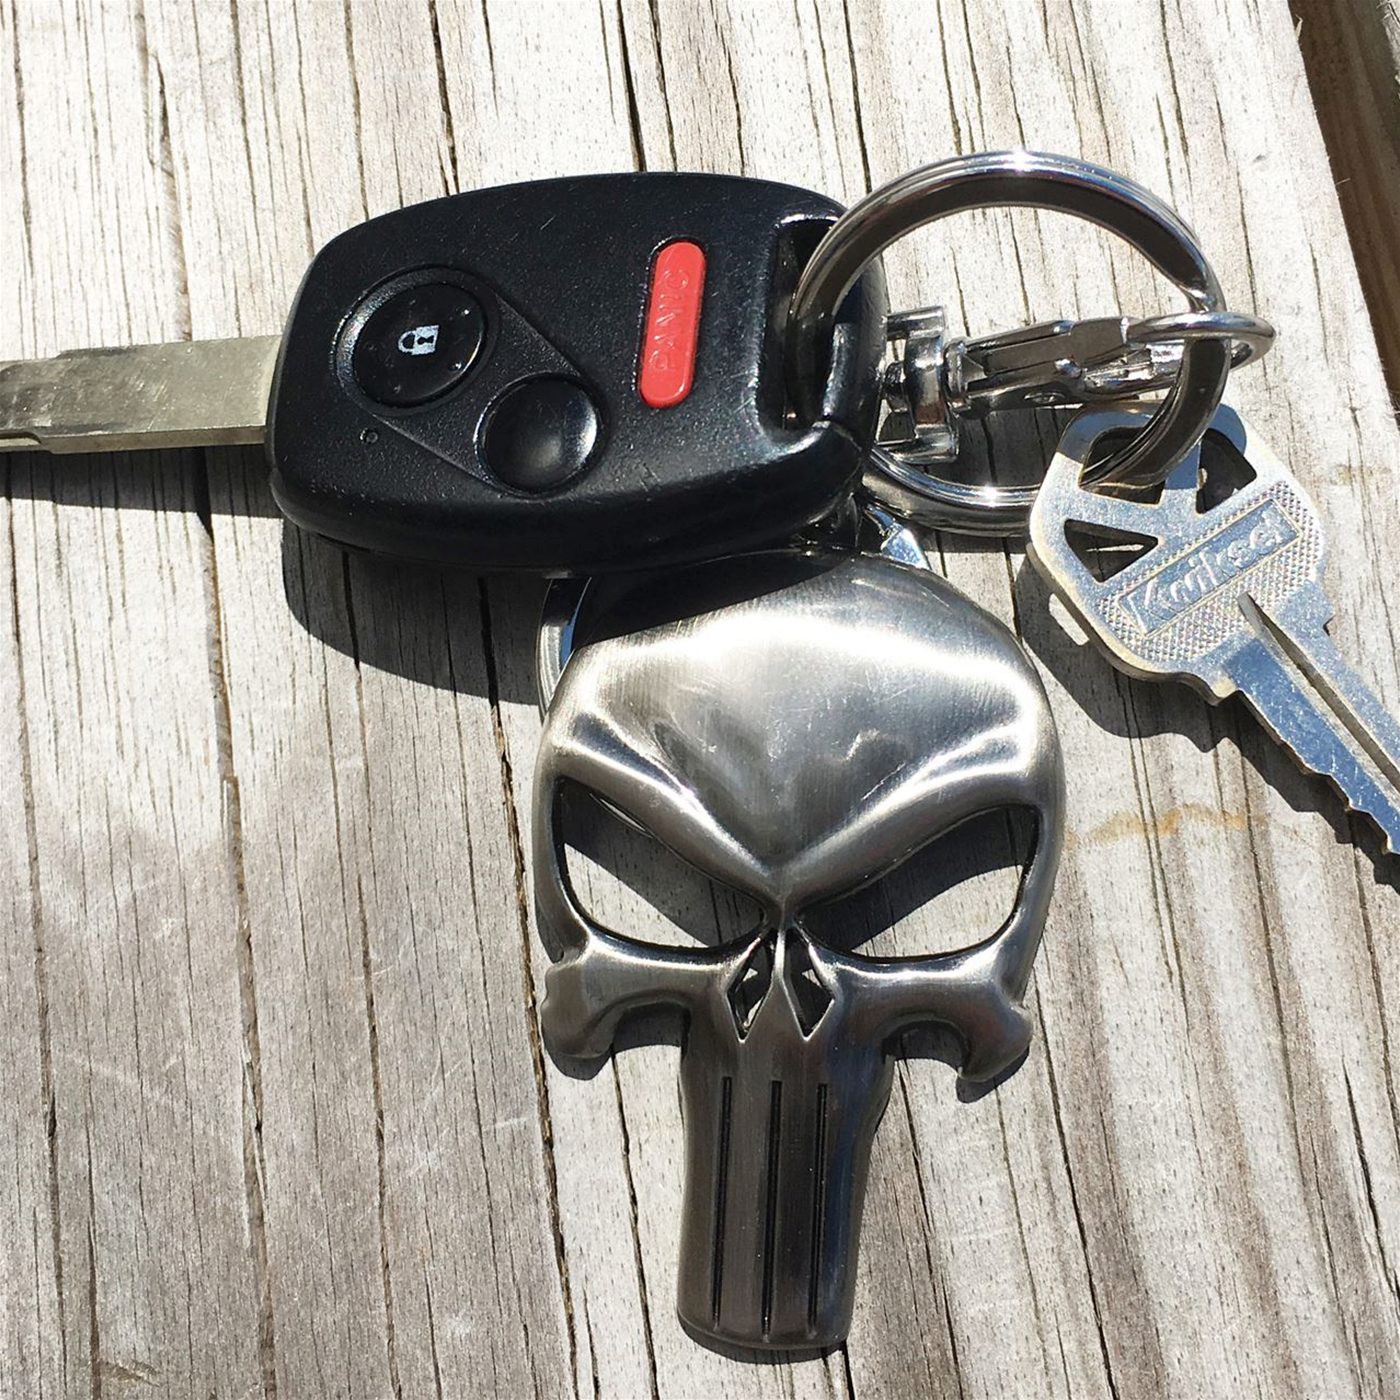 Punisher Symbol Shiny Pewter Keychain